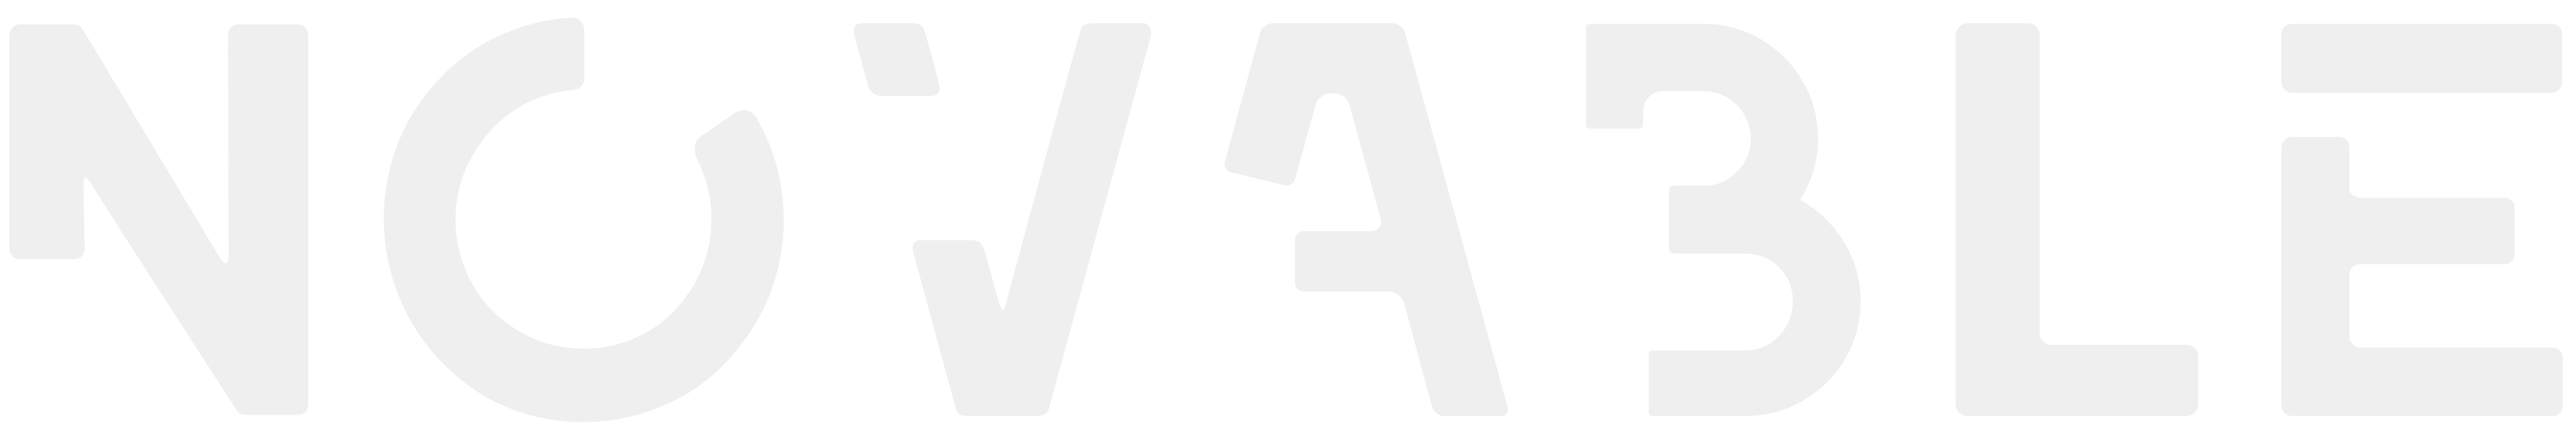 Novable logo